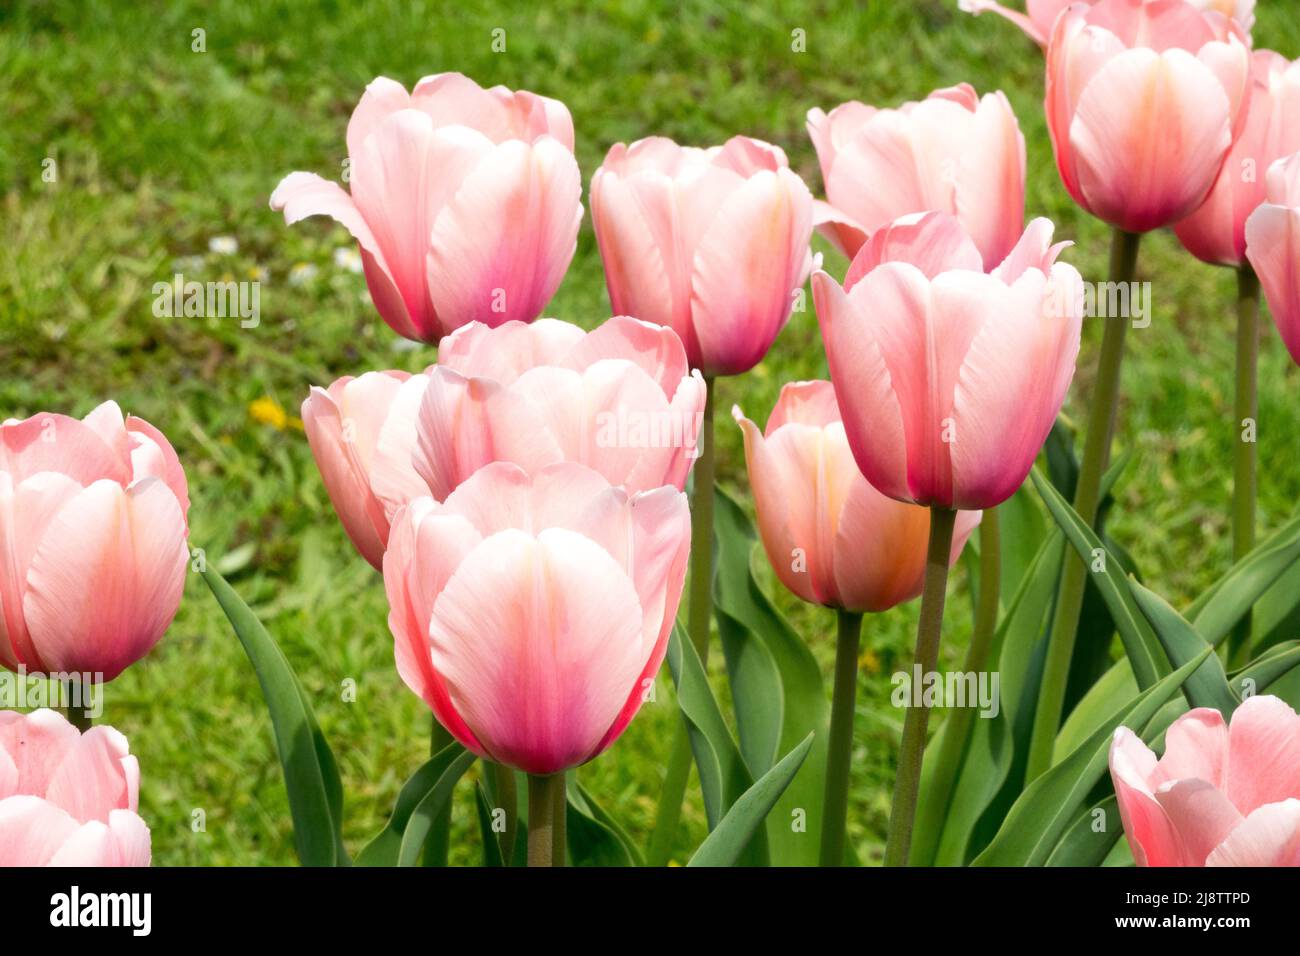 Schöne rosa Tulipa Apricot Impression Tulpen Lachsfarbe blüht in einem Garten Blumenbeet, kann Tulpe darwin Hybrid Stockfoto